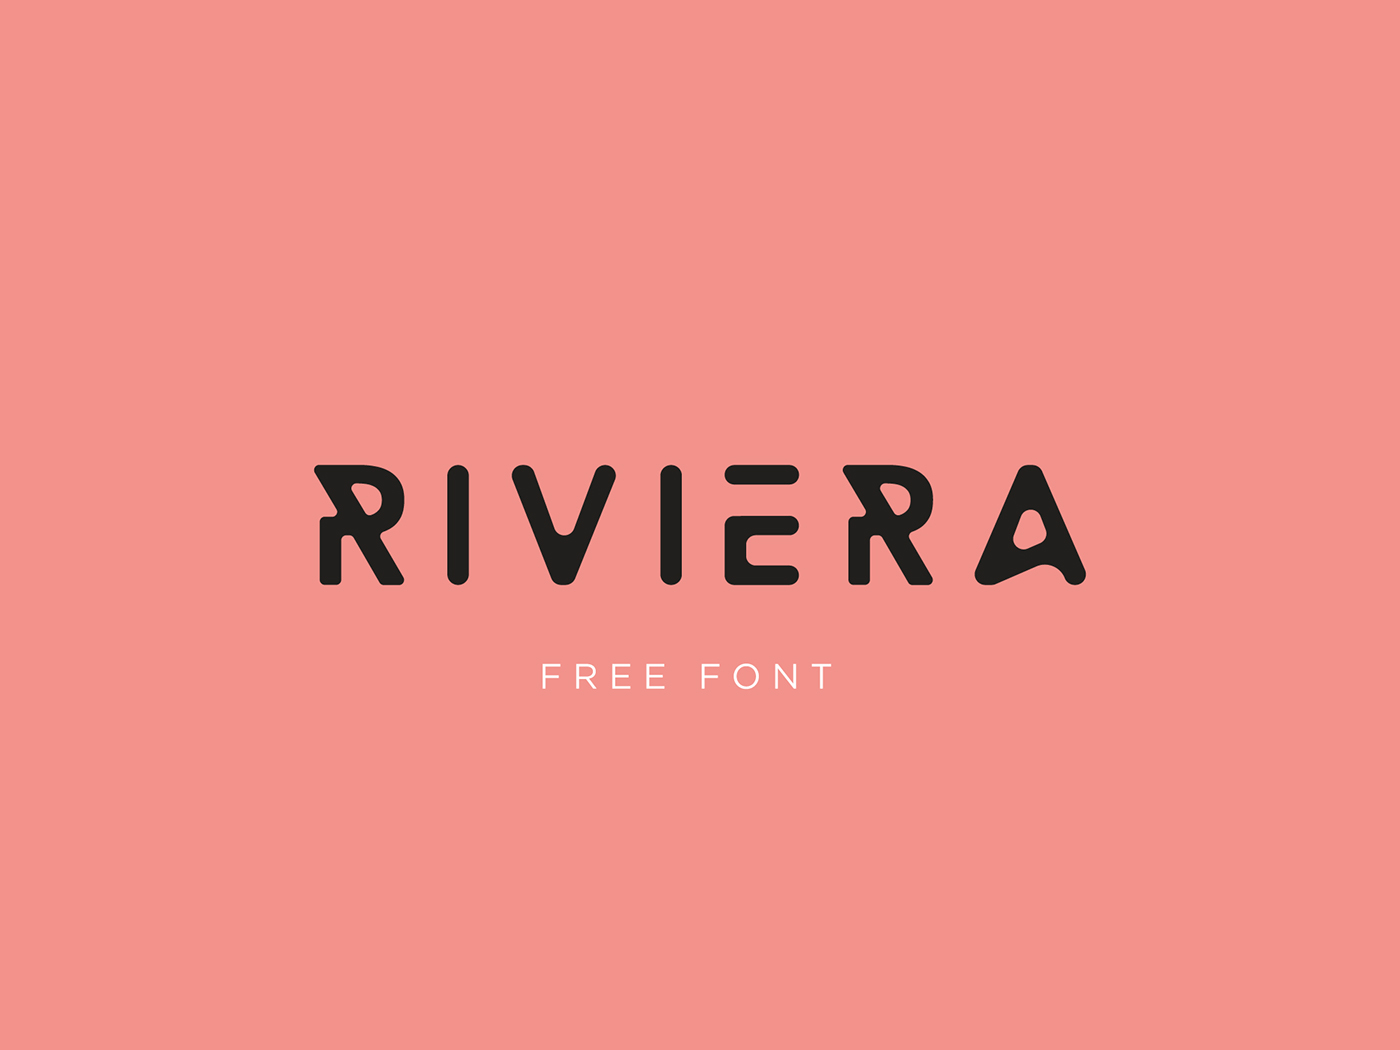 font Typeface type free